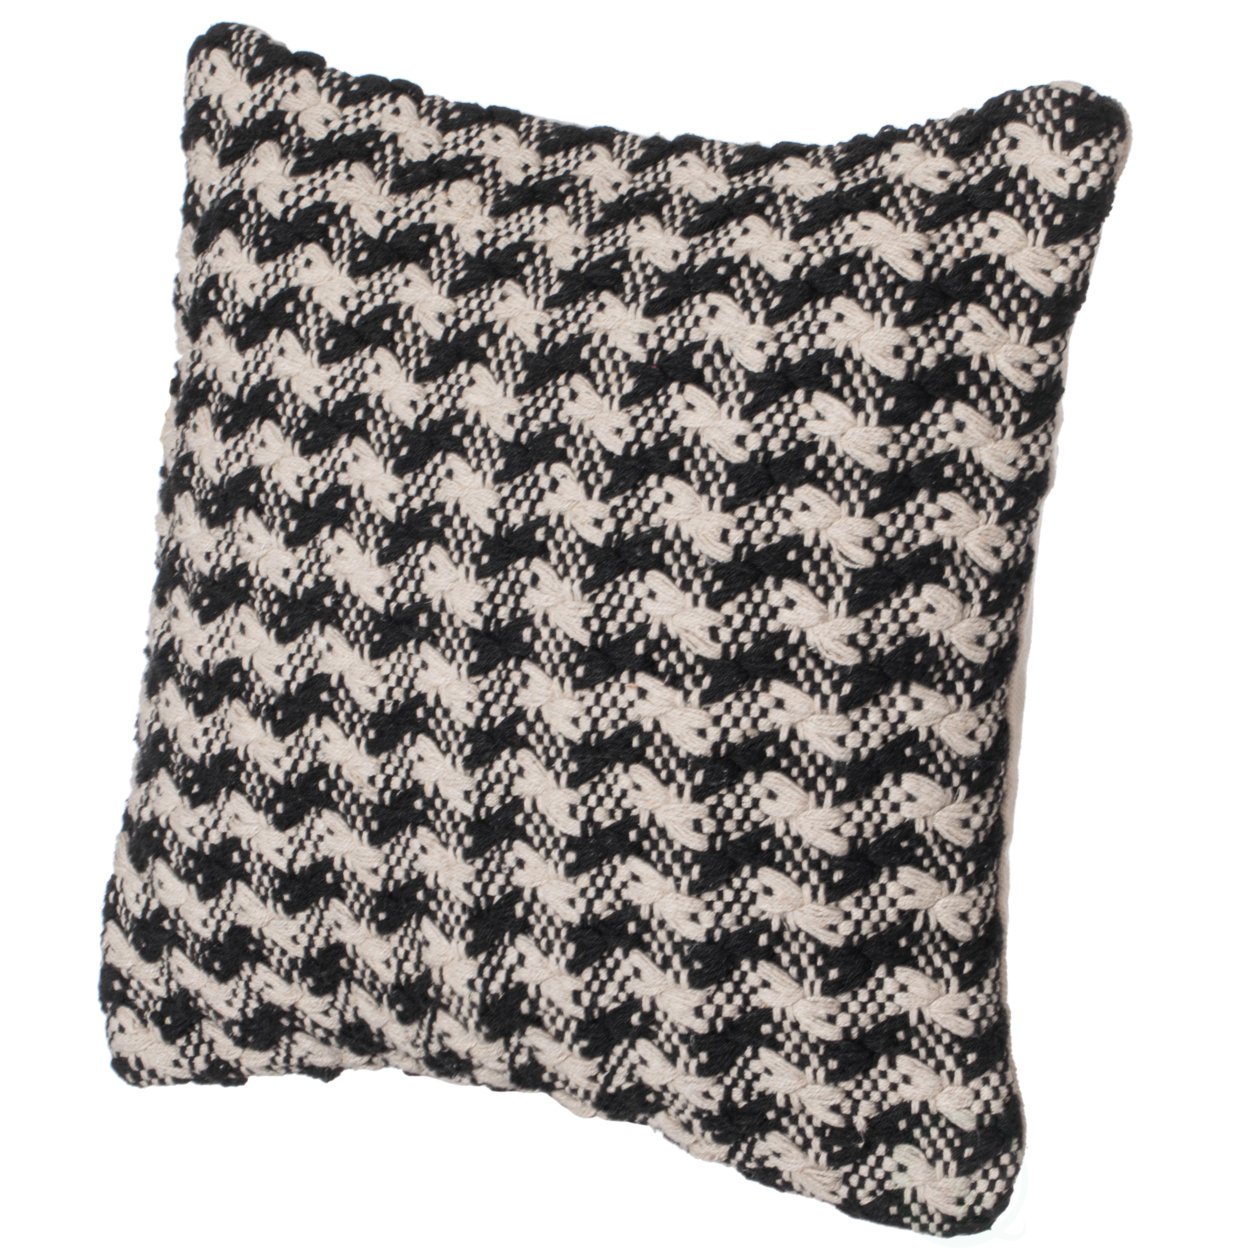 16 Handwoven Cotton Throw Pillow Cover Chevron & Gingham Design Black & White - Gingham